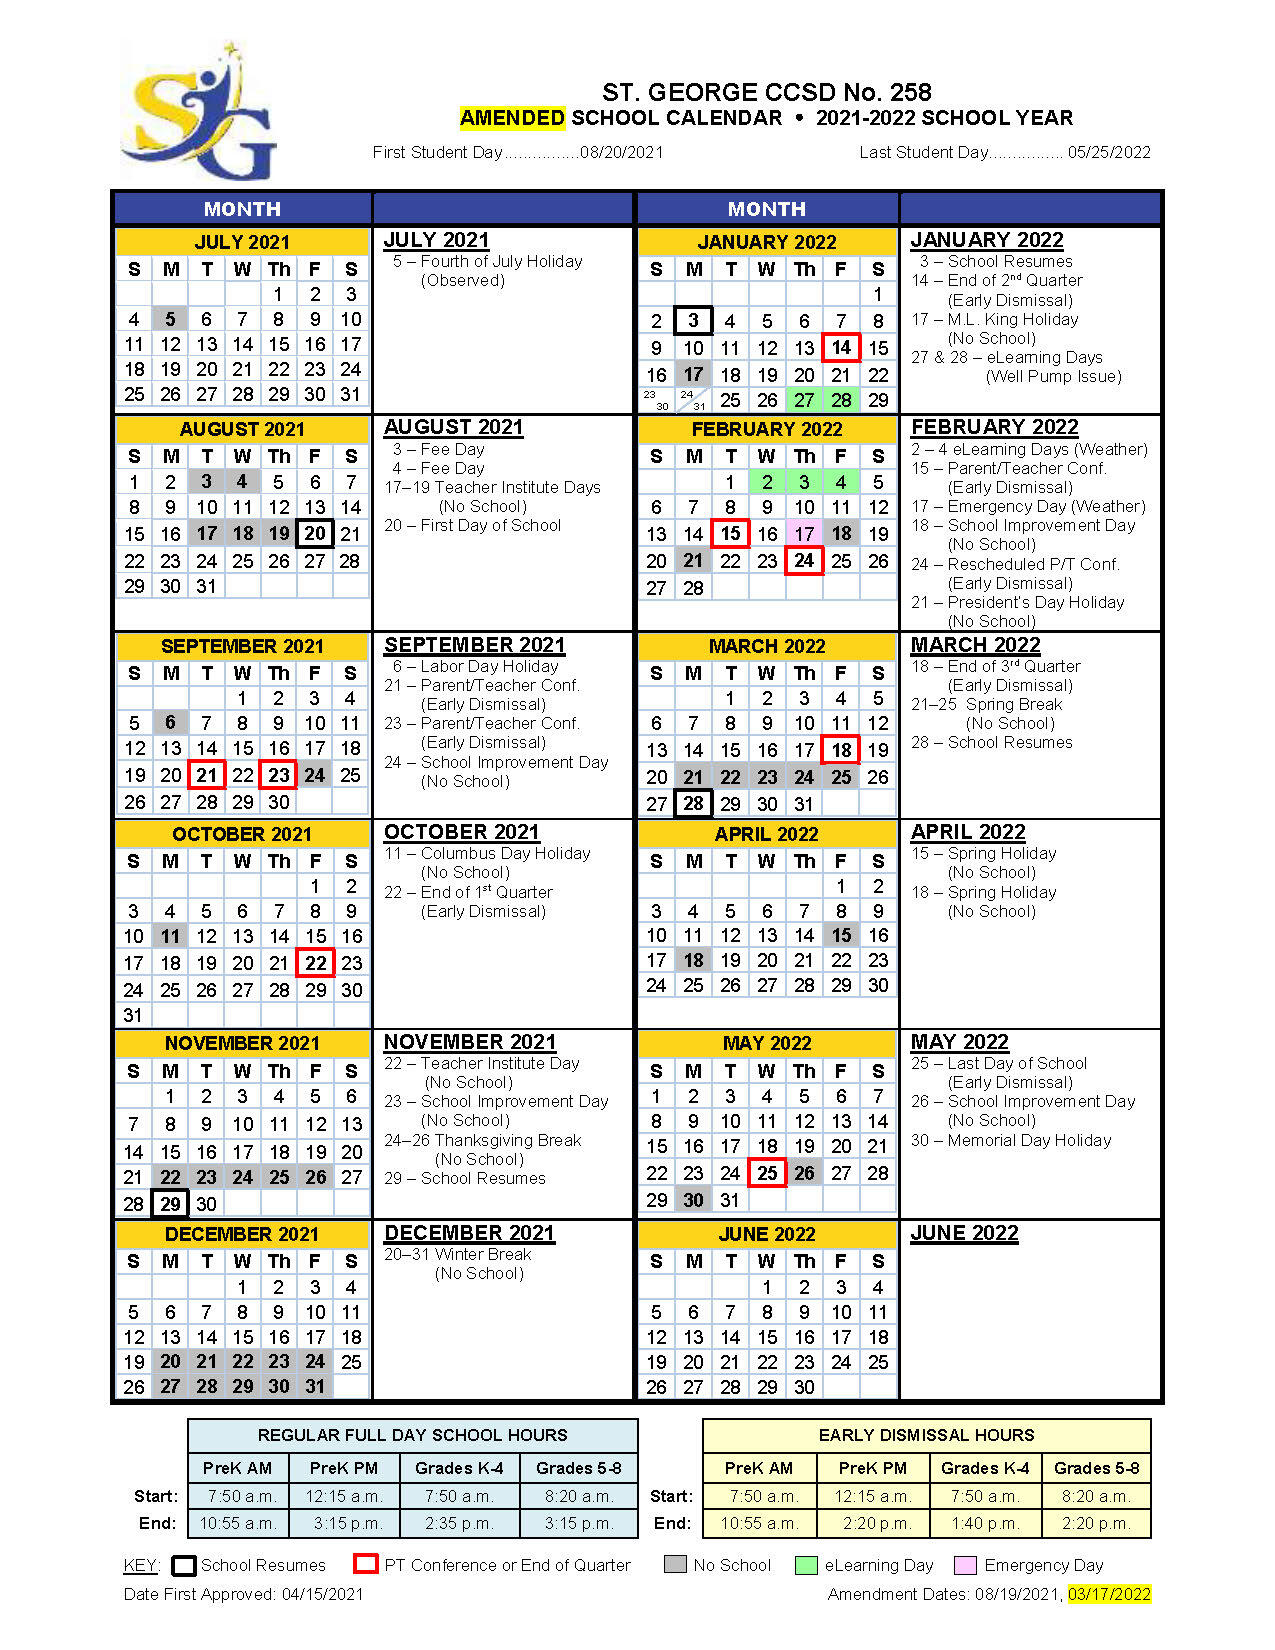 District Calendar 2020-2021